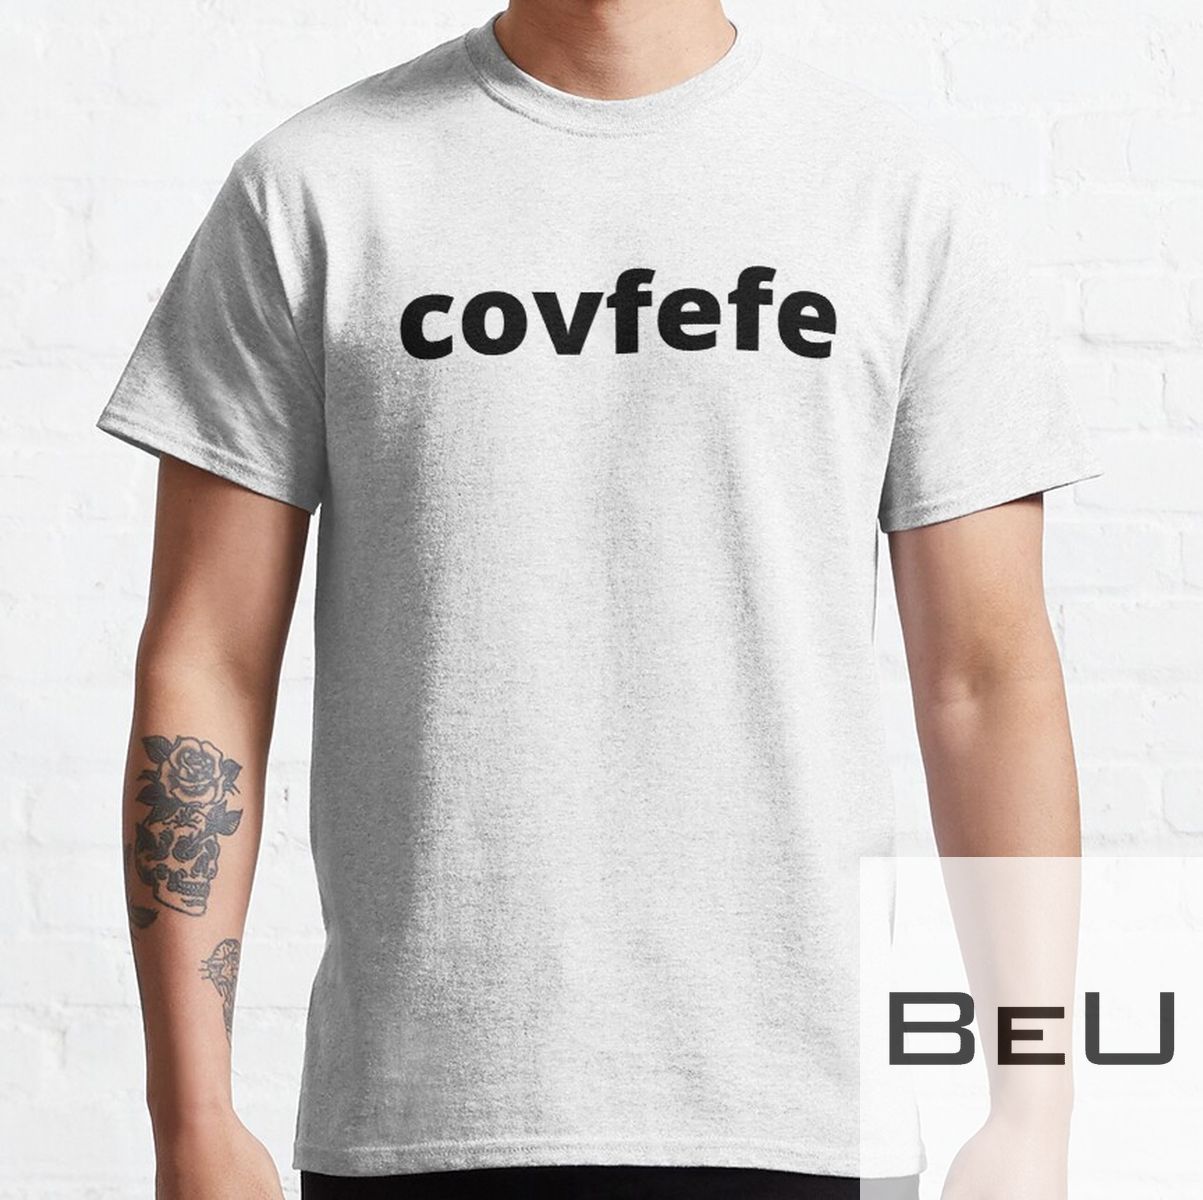 Covfefe T-shirt